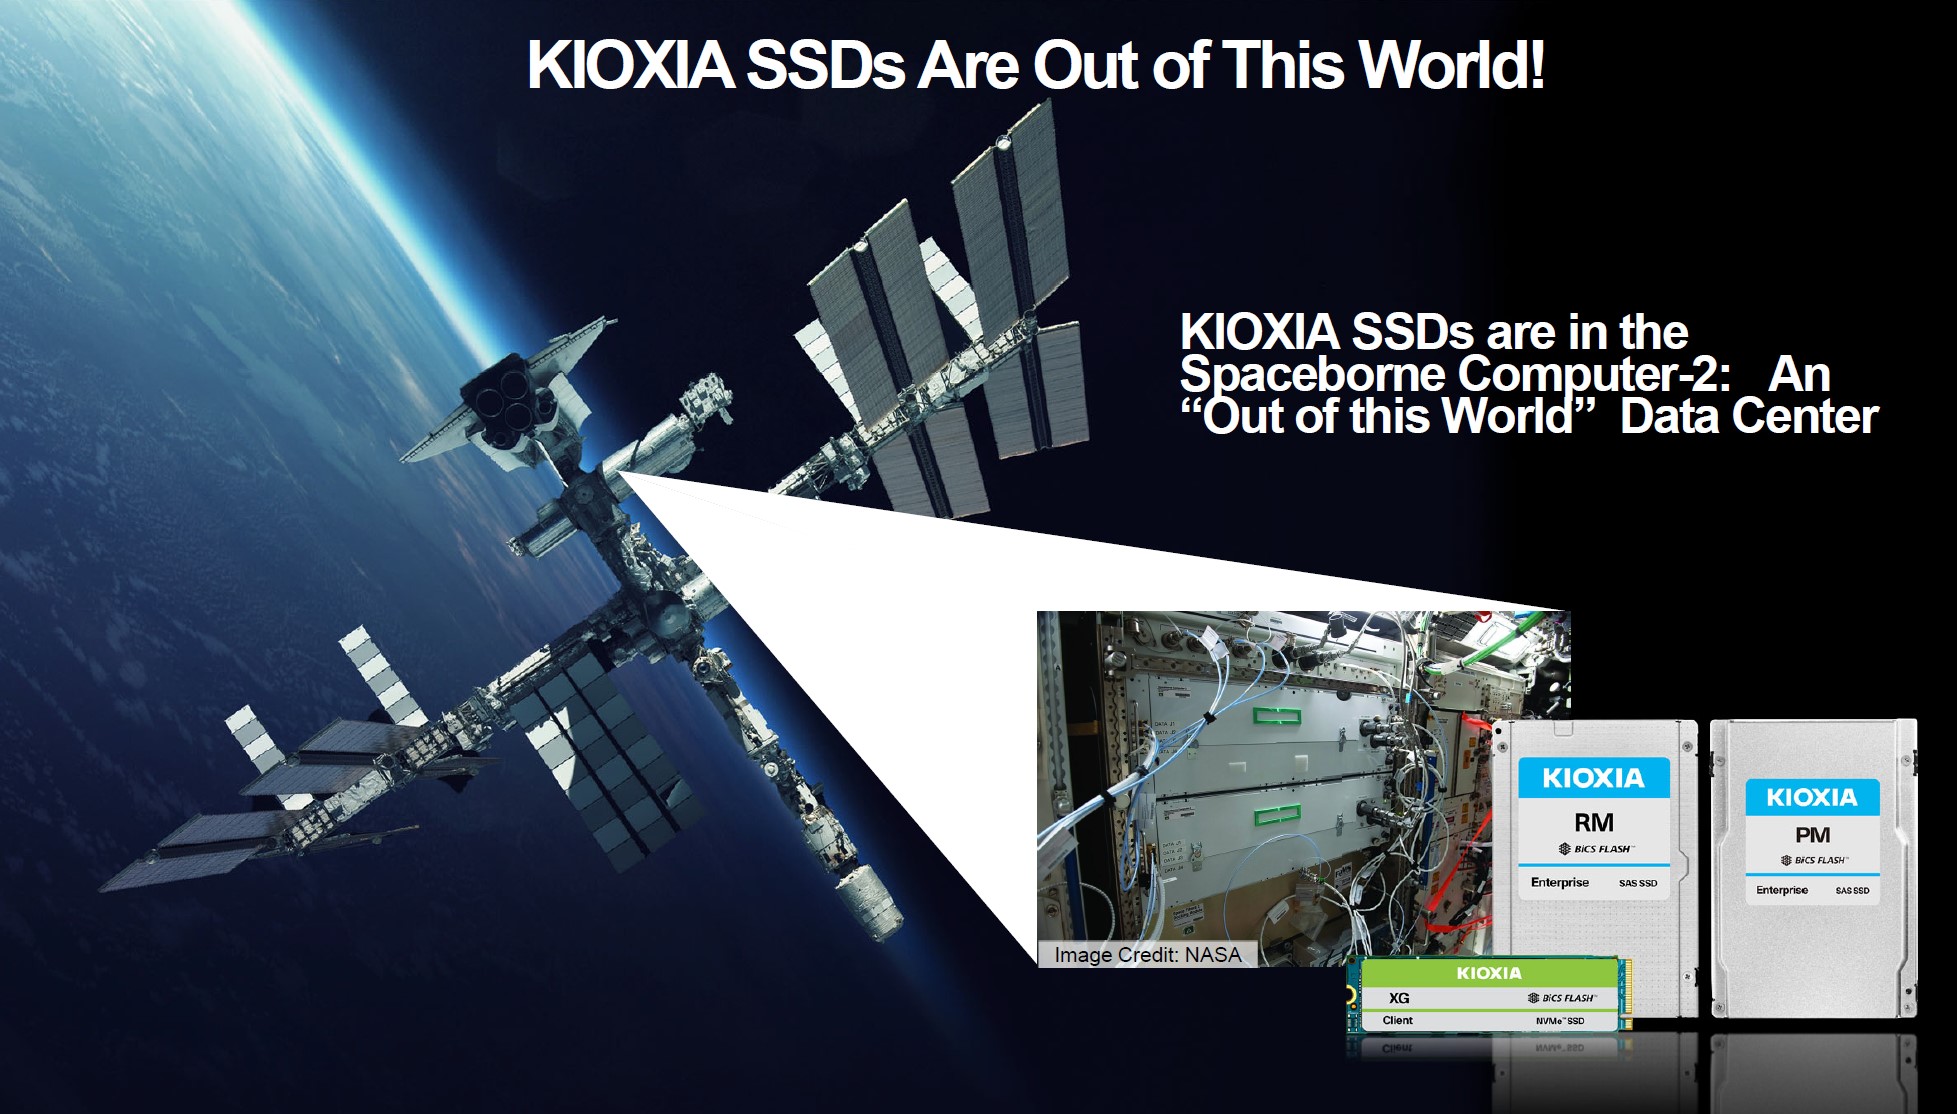 Kioxia SSDs In HPE Spaceborne Computer 2 HPE Edgeline EL4000 And HPE DL360 Gen10